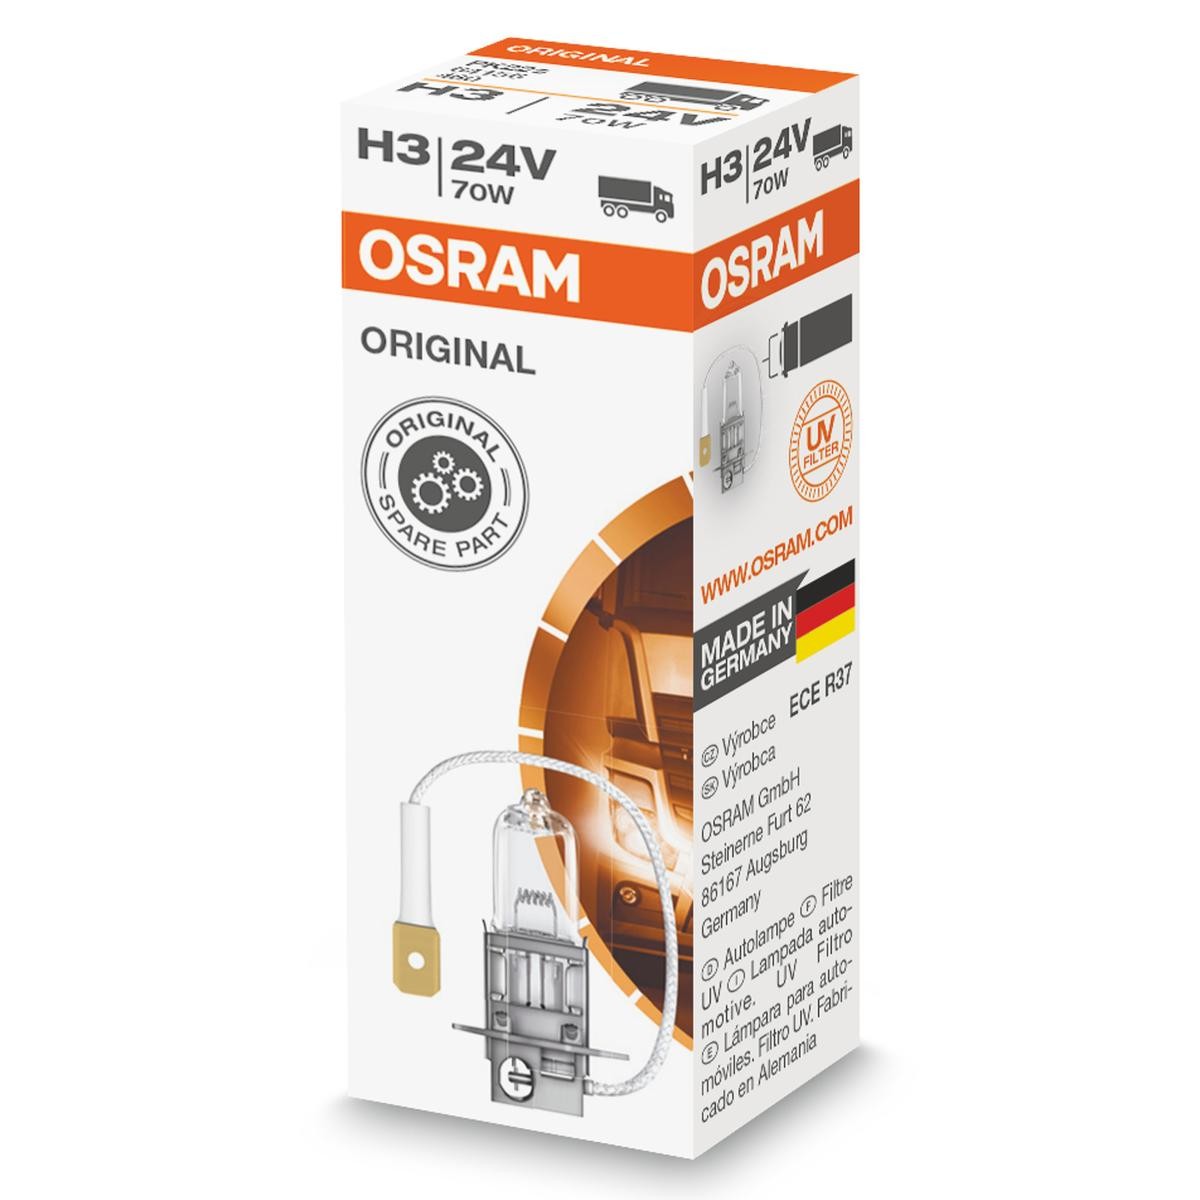 OSRAM ORIGINAL LINE 64156 Bulb, spotlight H3 24V 70W PK22s, 3200K, Halogen